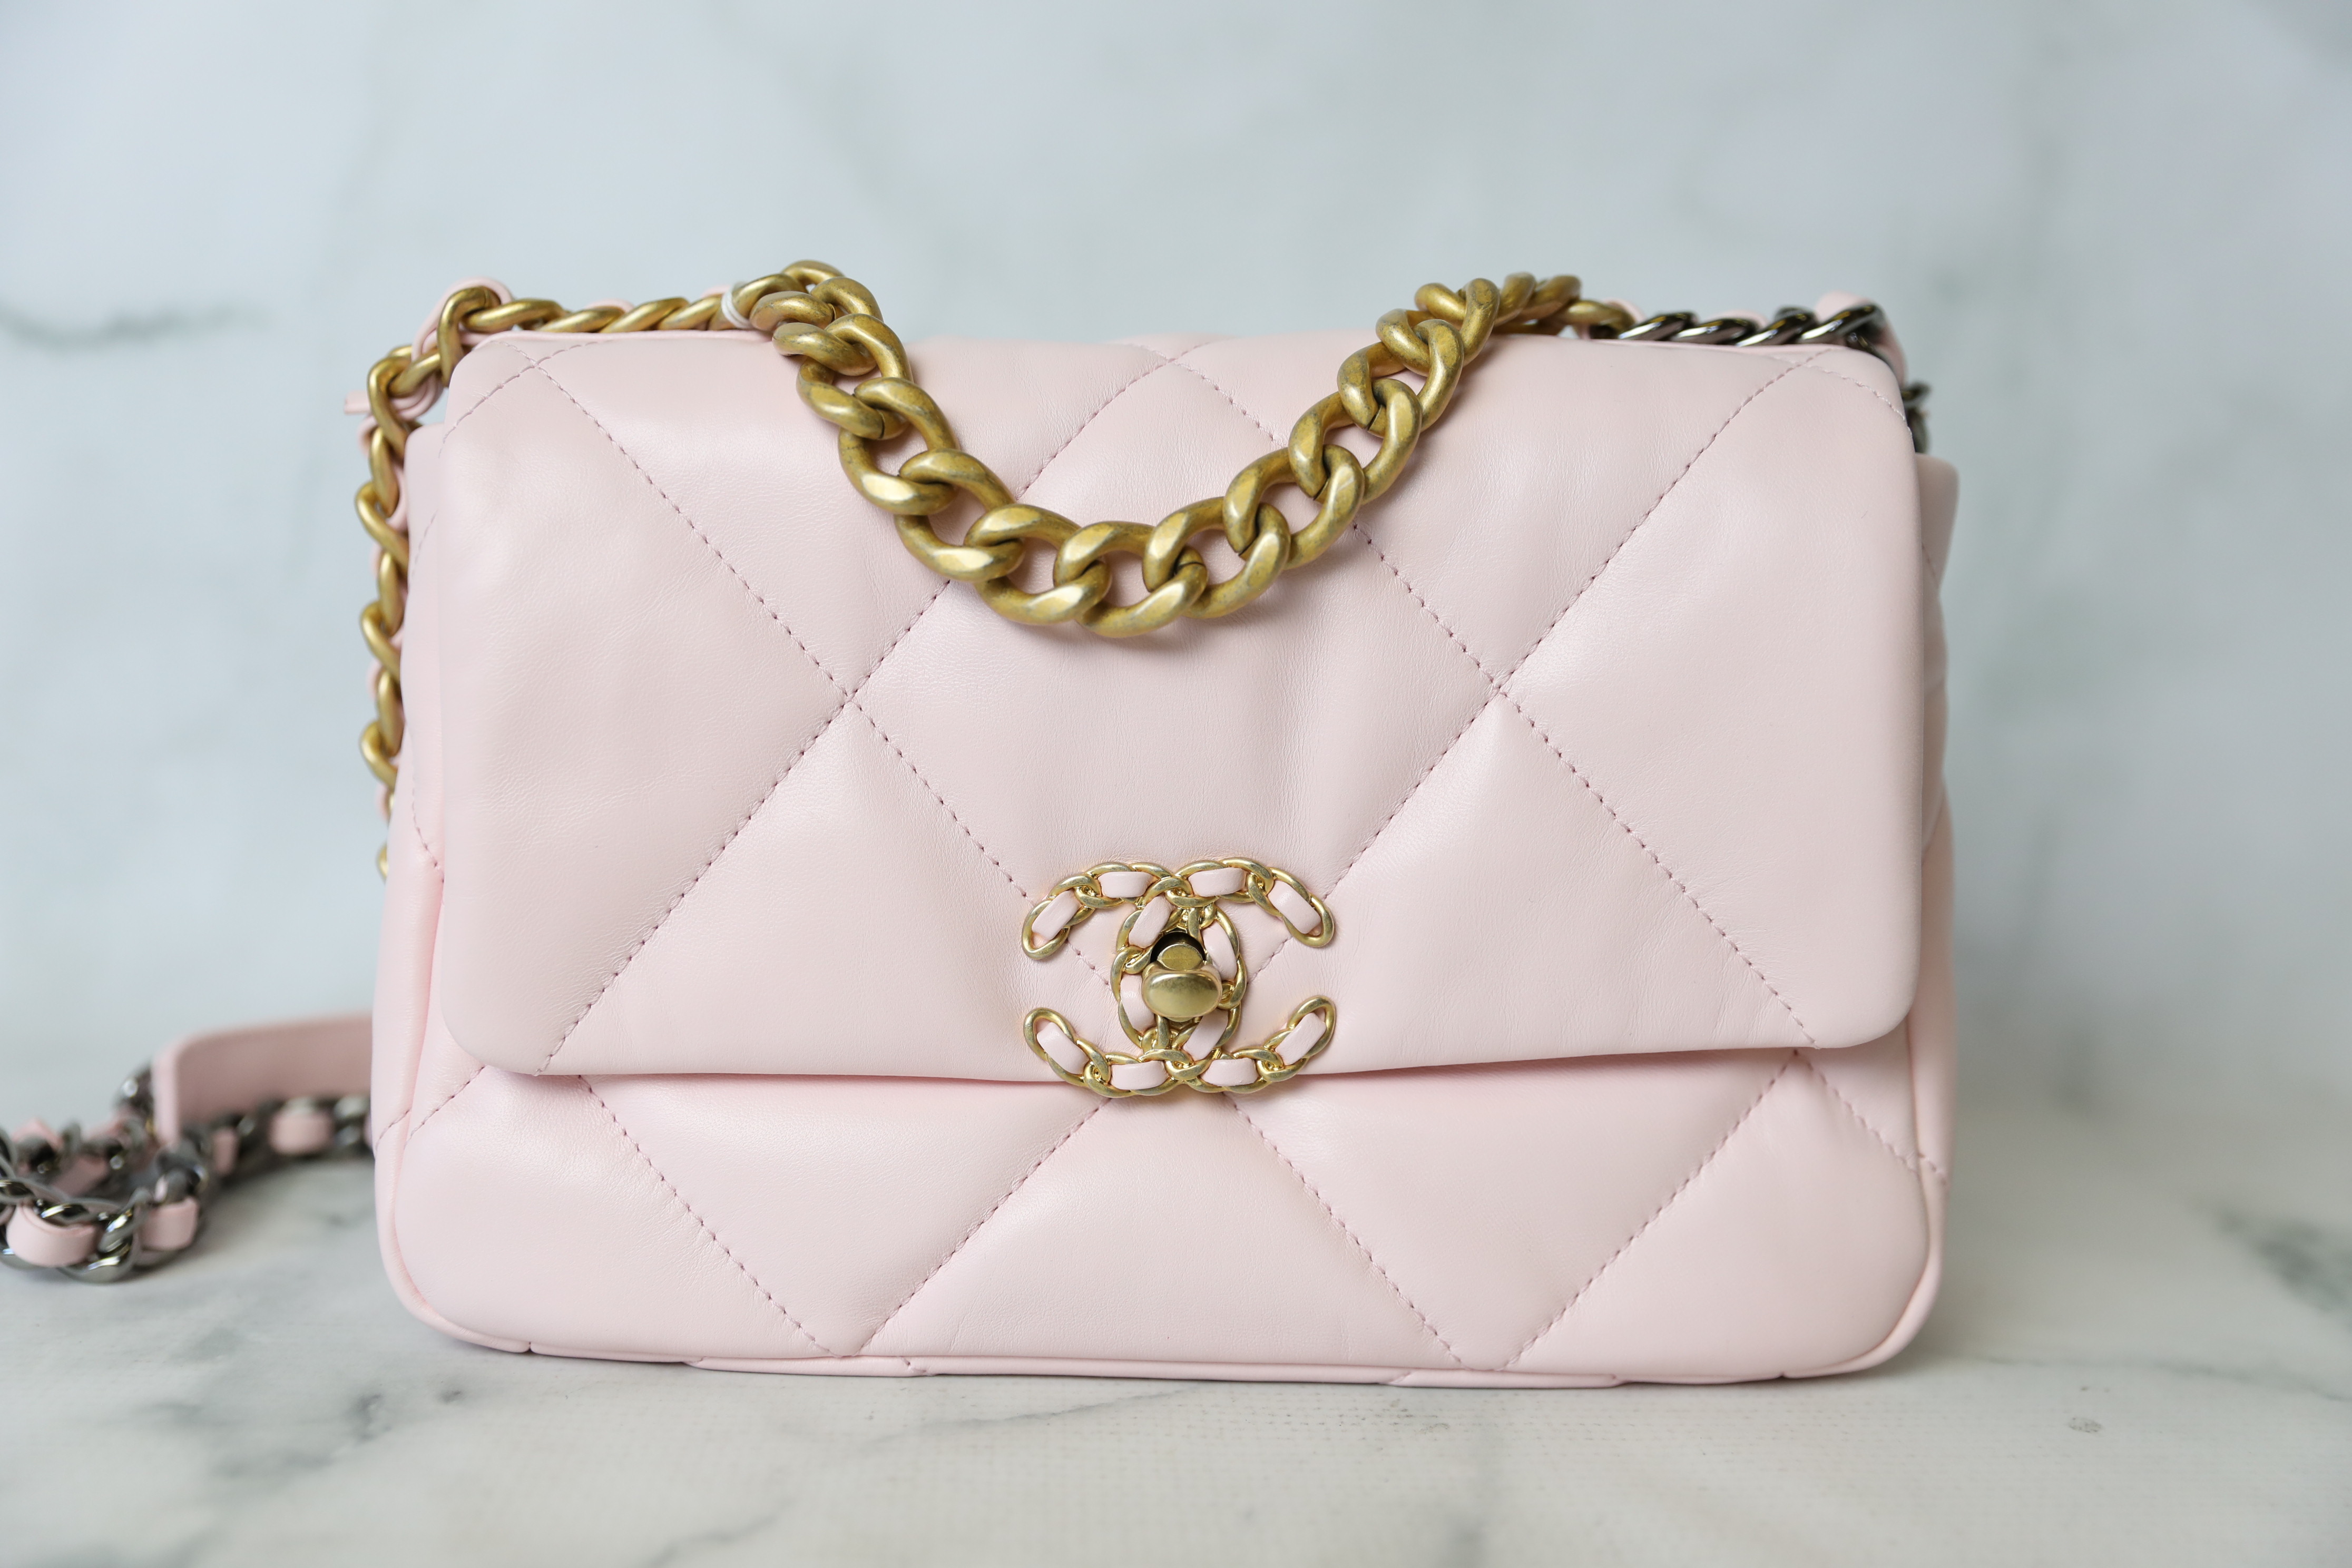 Chanel 19 Small, 22K Hot Pink Lambskin, New in Box MA001 - Julia Rose  Boston